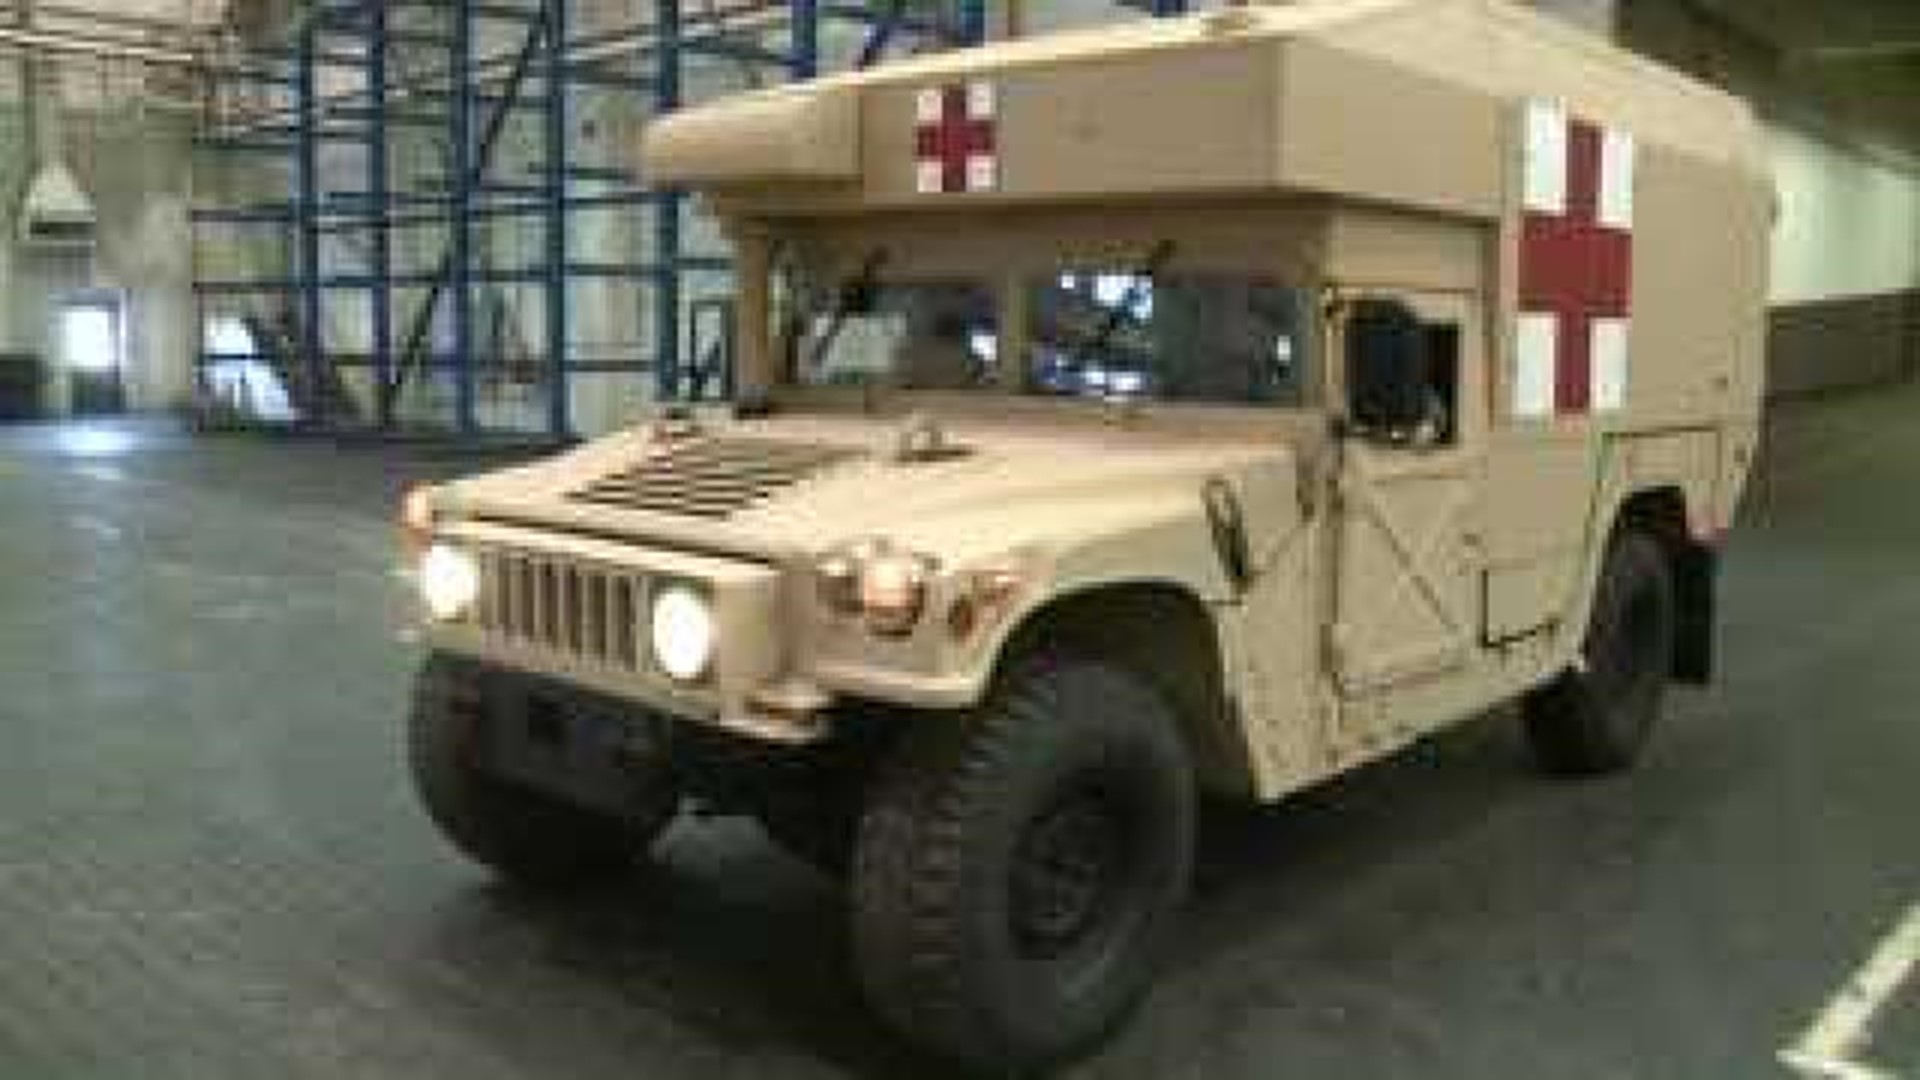 Arsenal gets Humvee ambulance